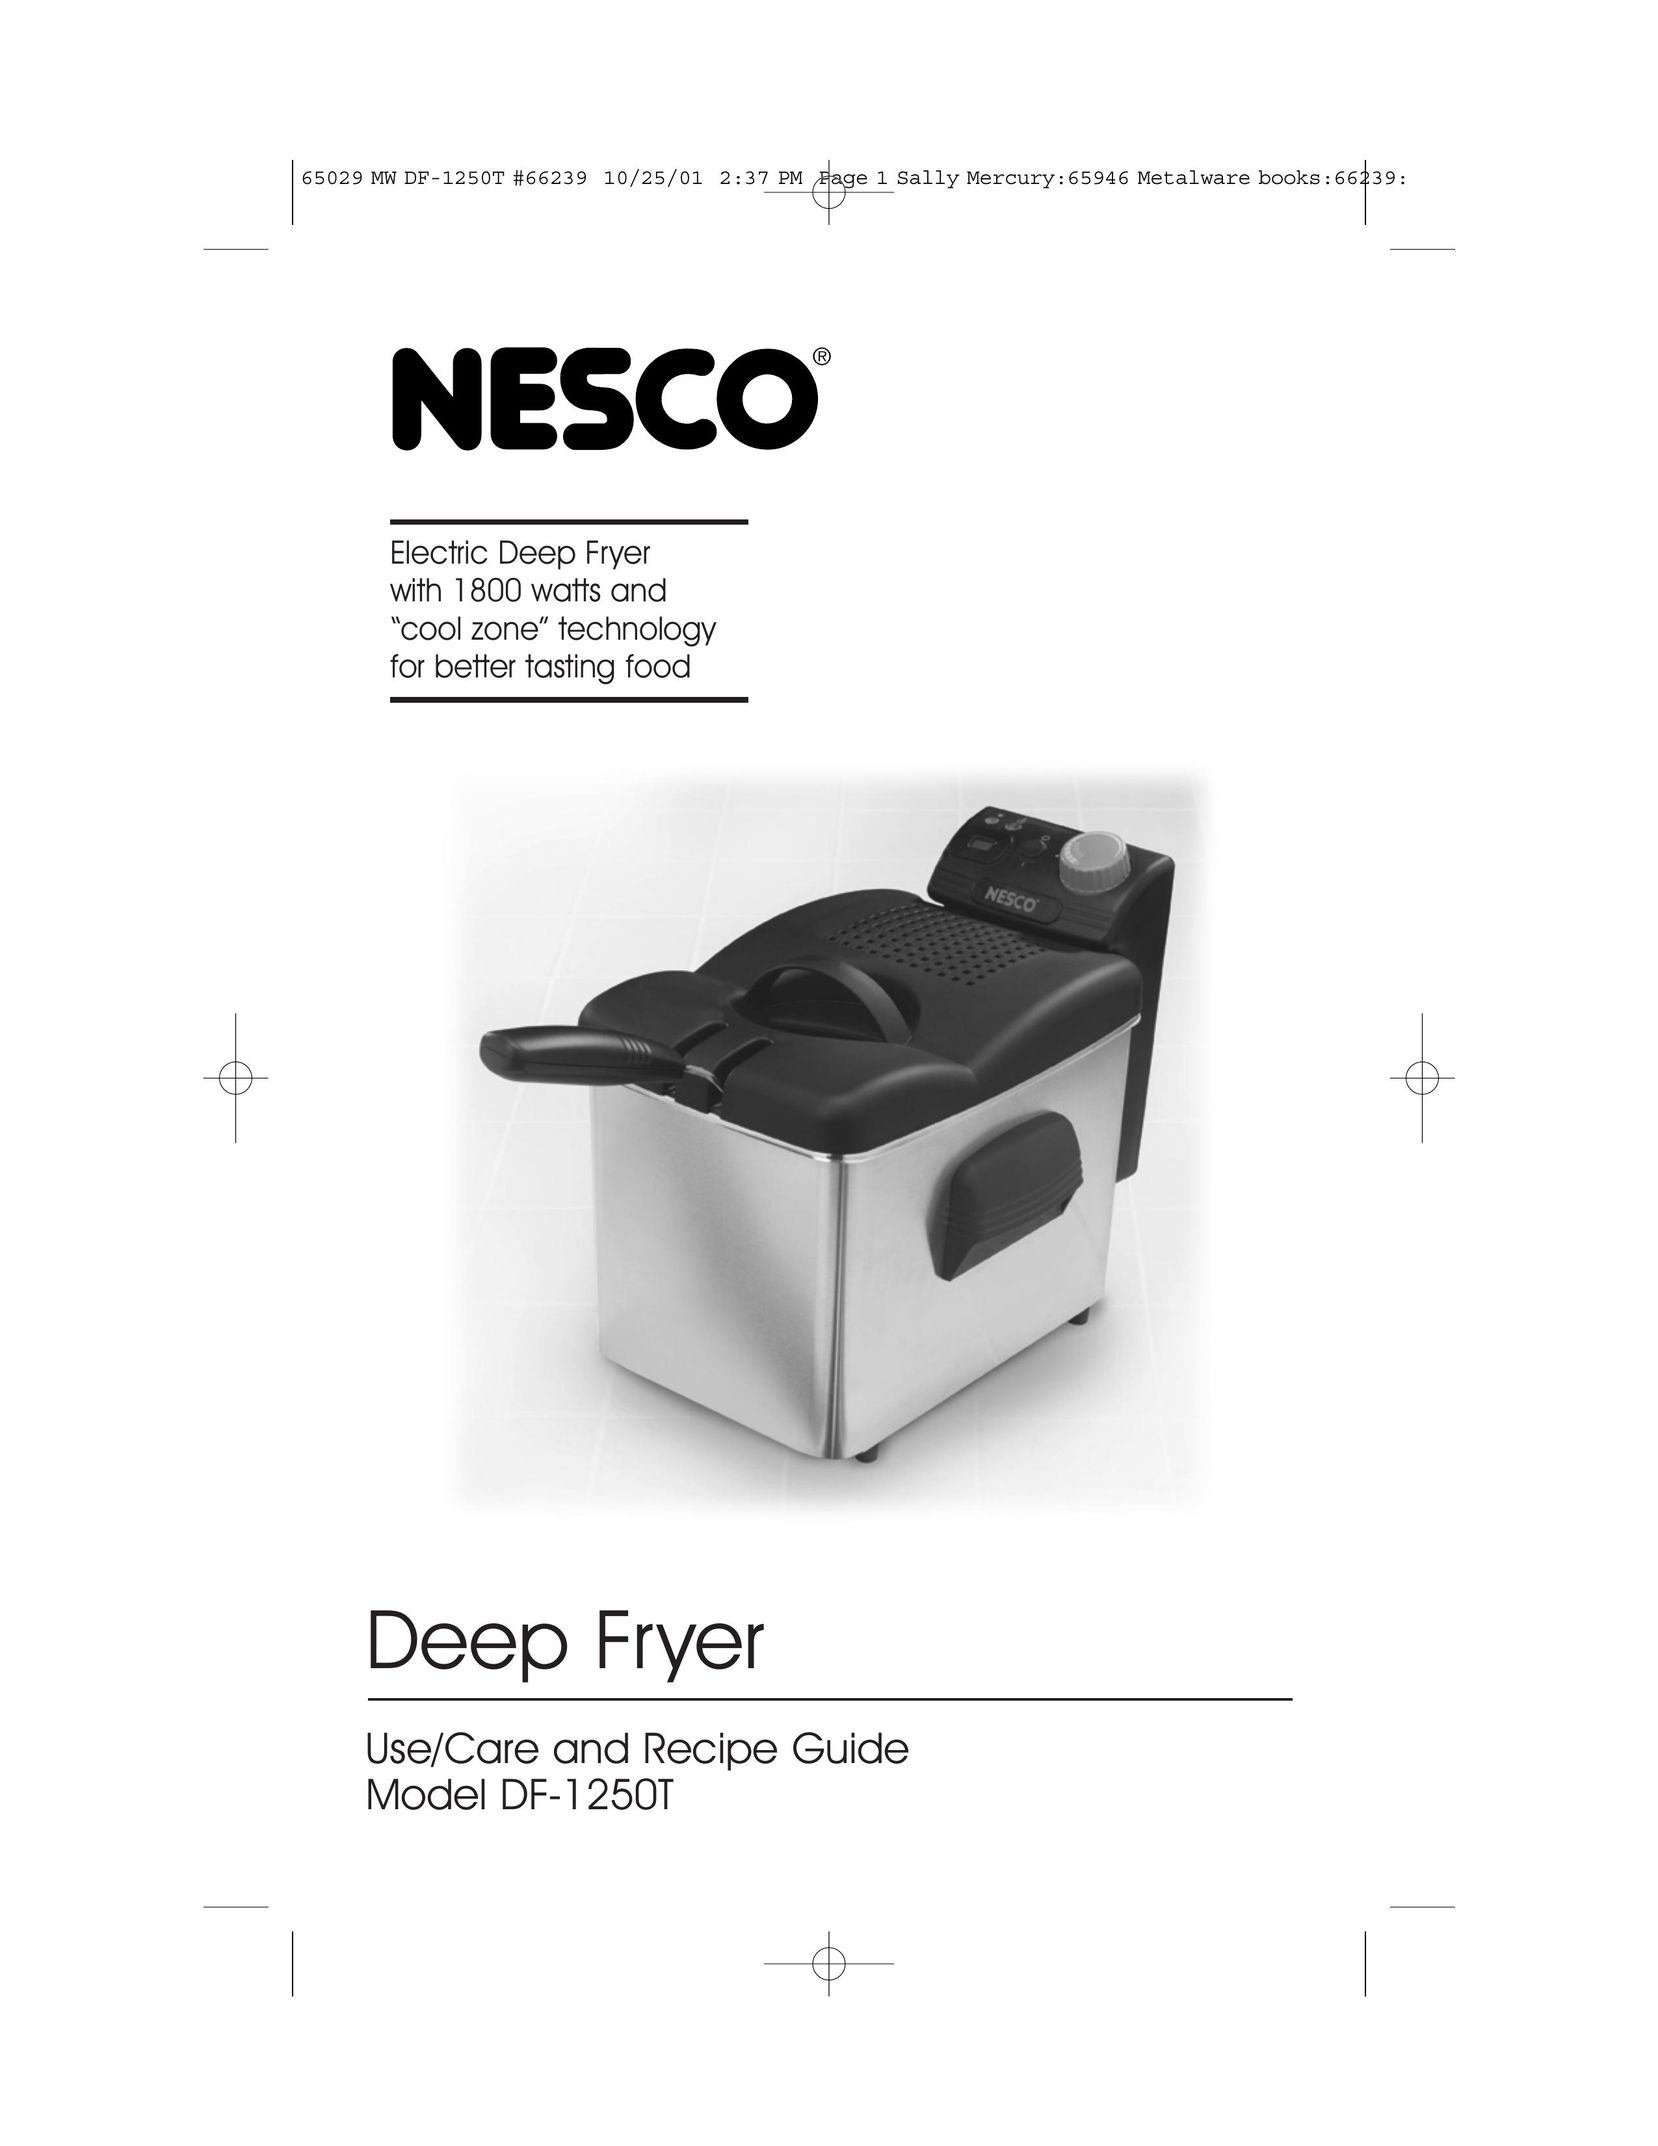 Nesco DF-1250T Fryer User Manual